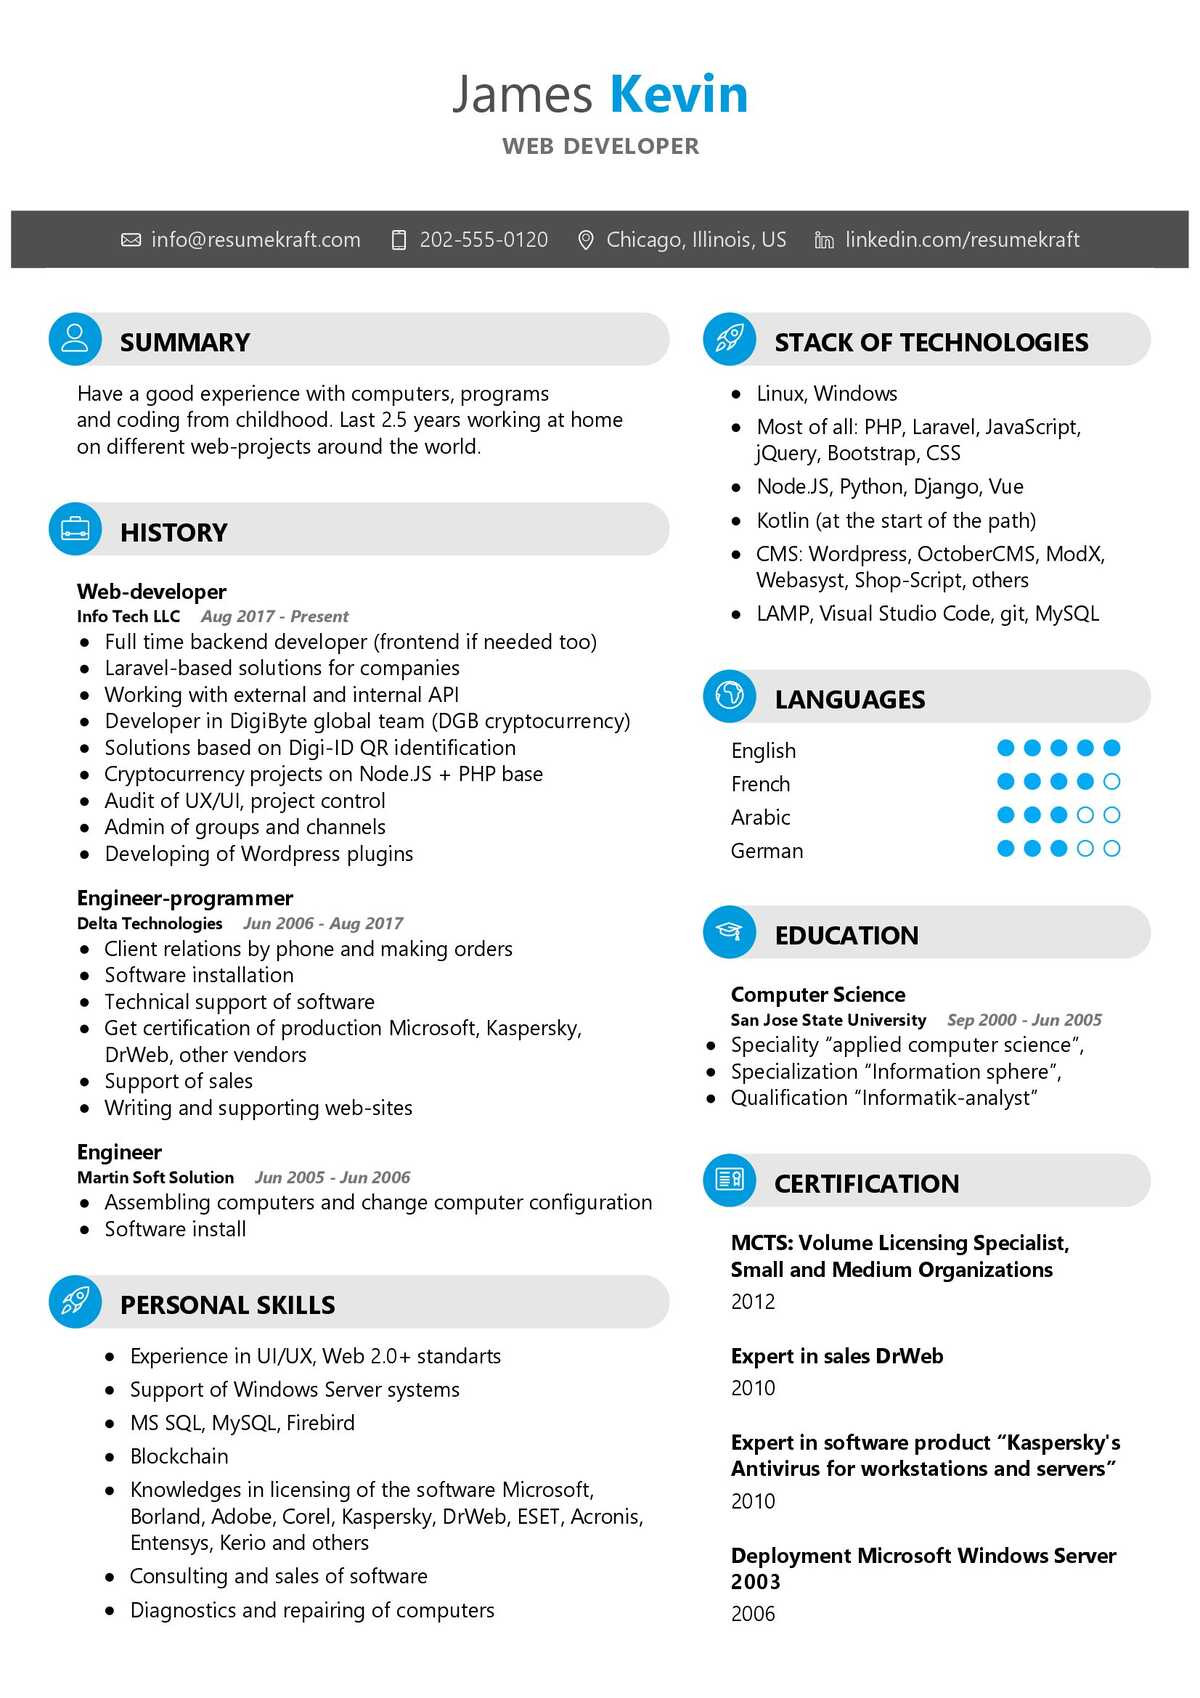 Sample Resume for Web Developer without Experience Web Developer Resume Sample 2021 Writing Guide & Tips – Resumekraft